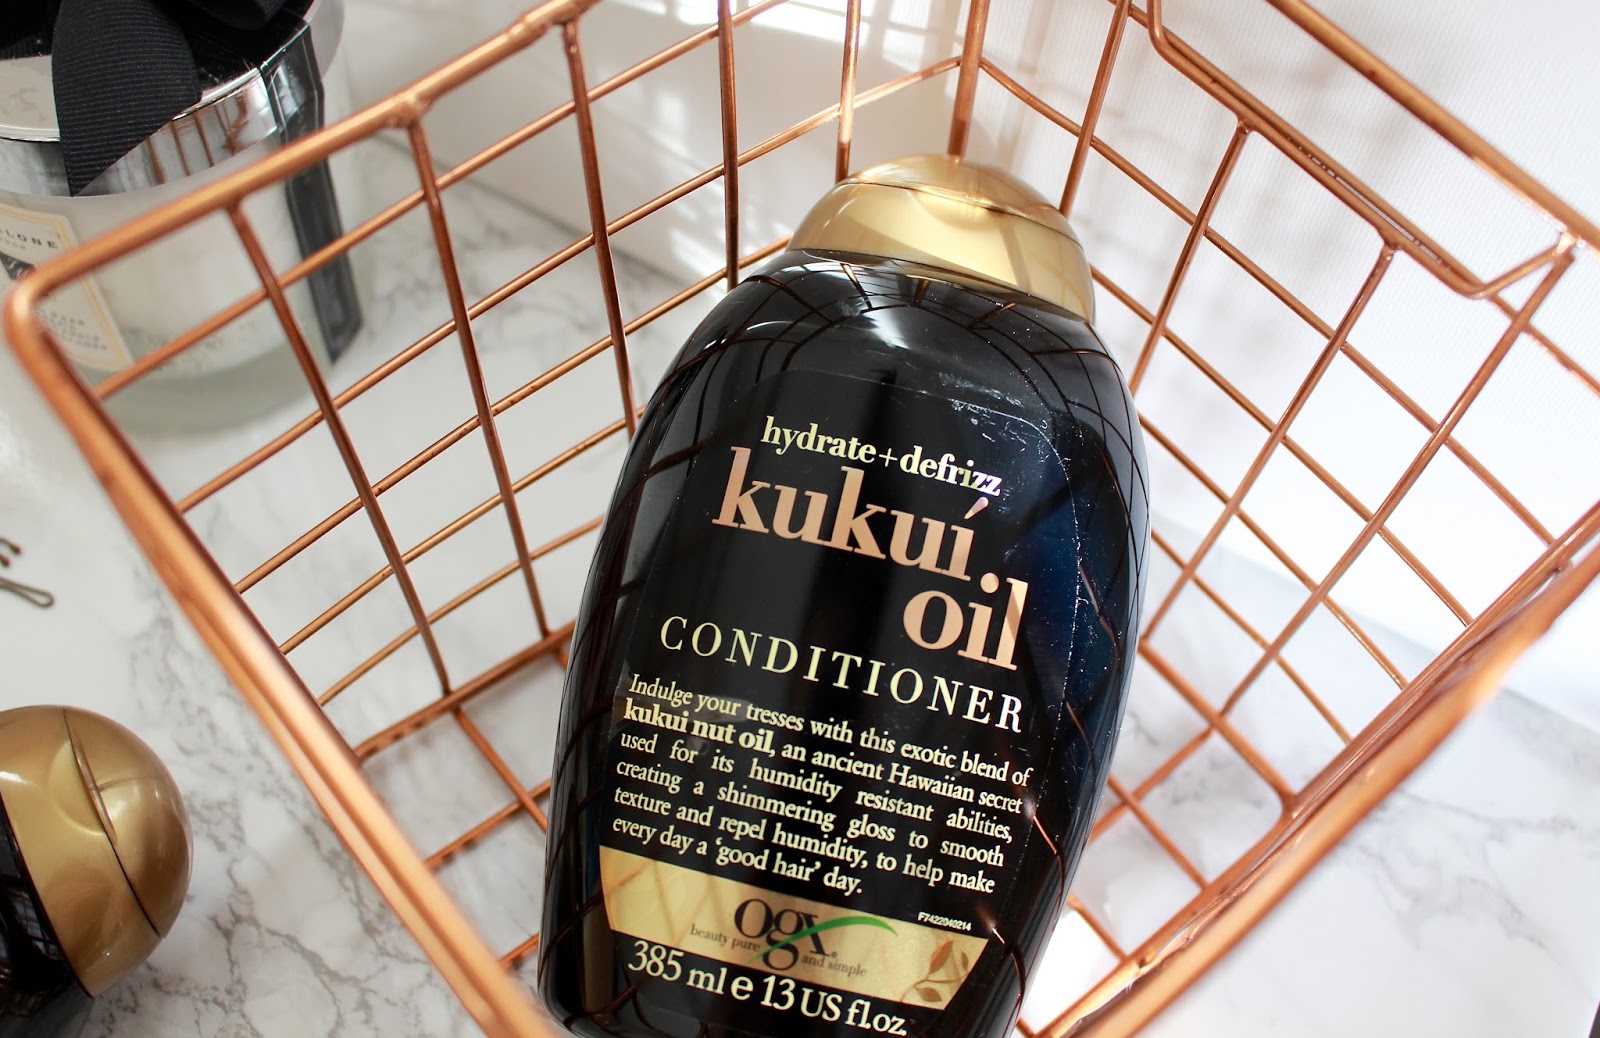 OGX Kukui Oil Review